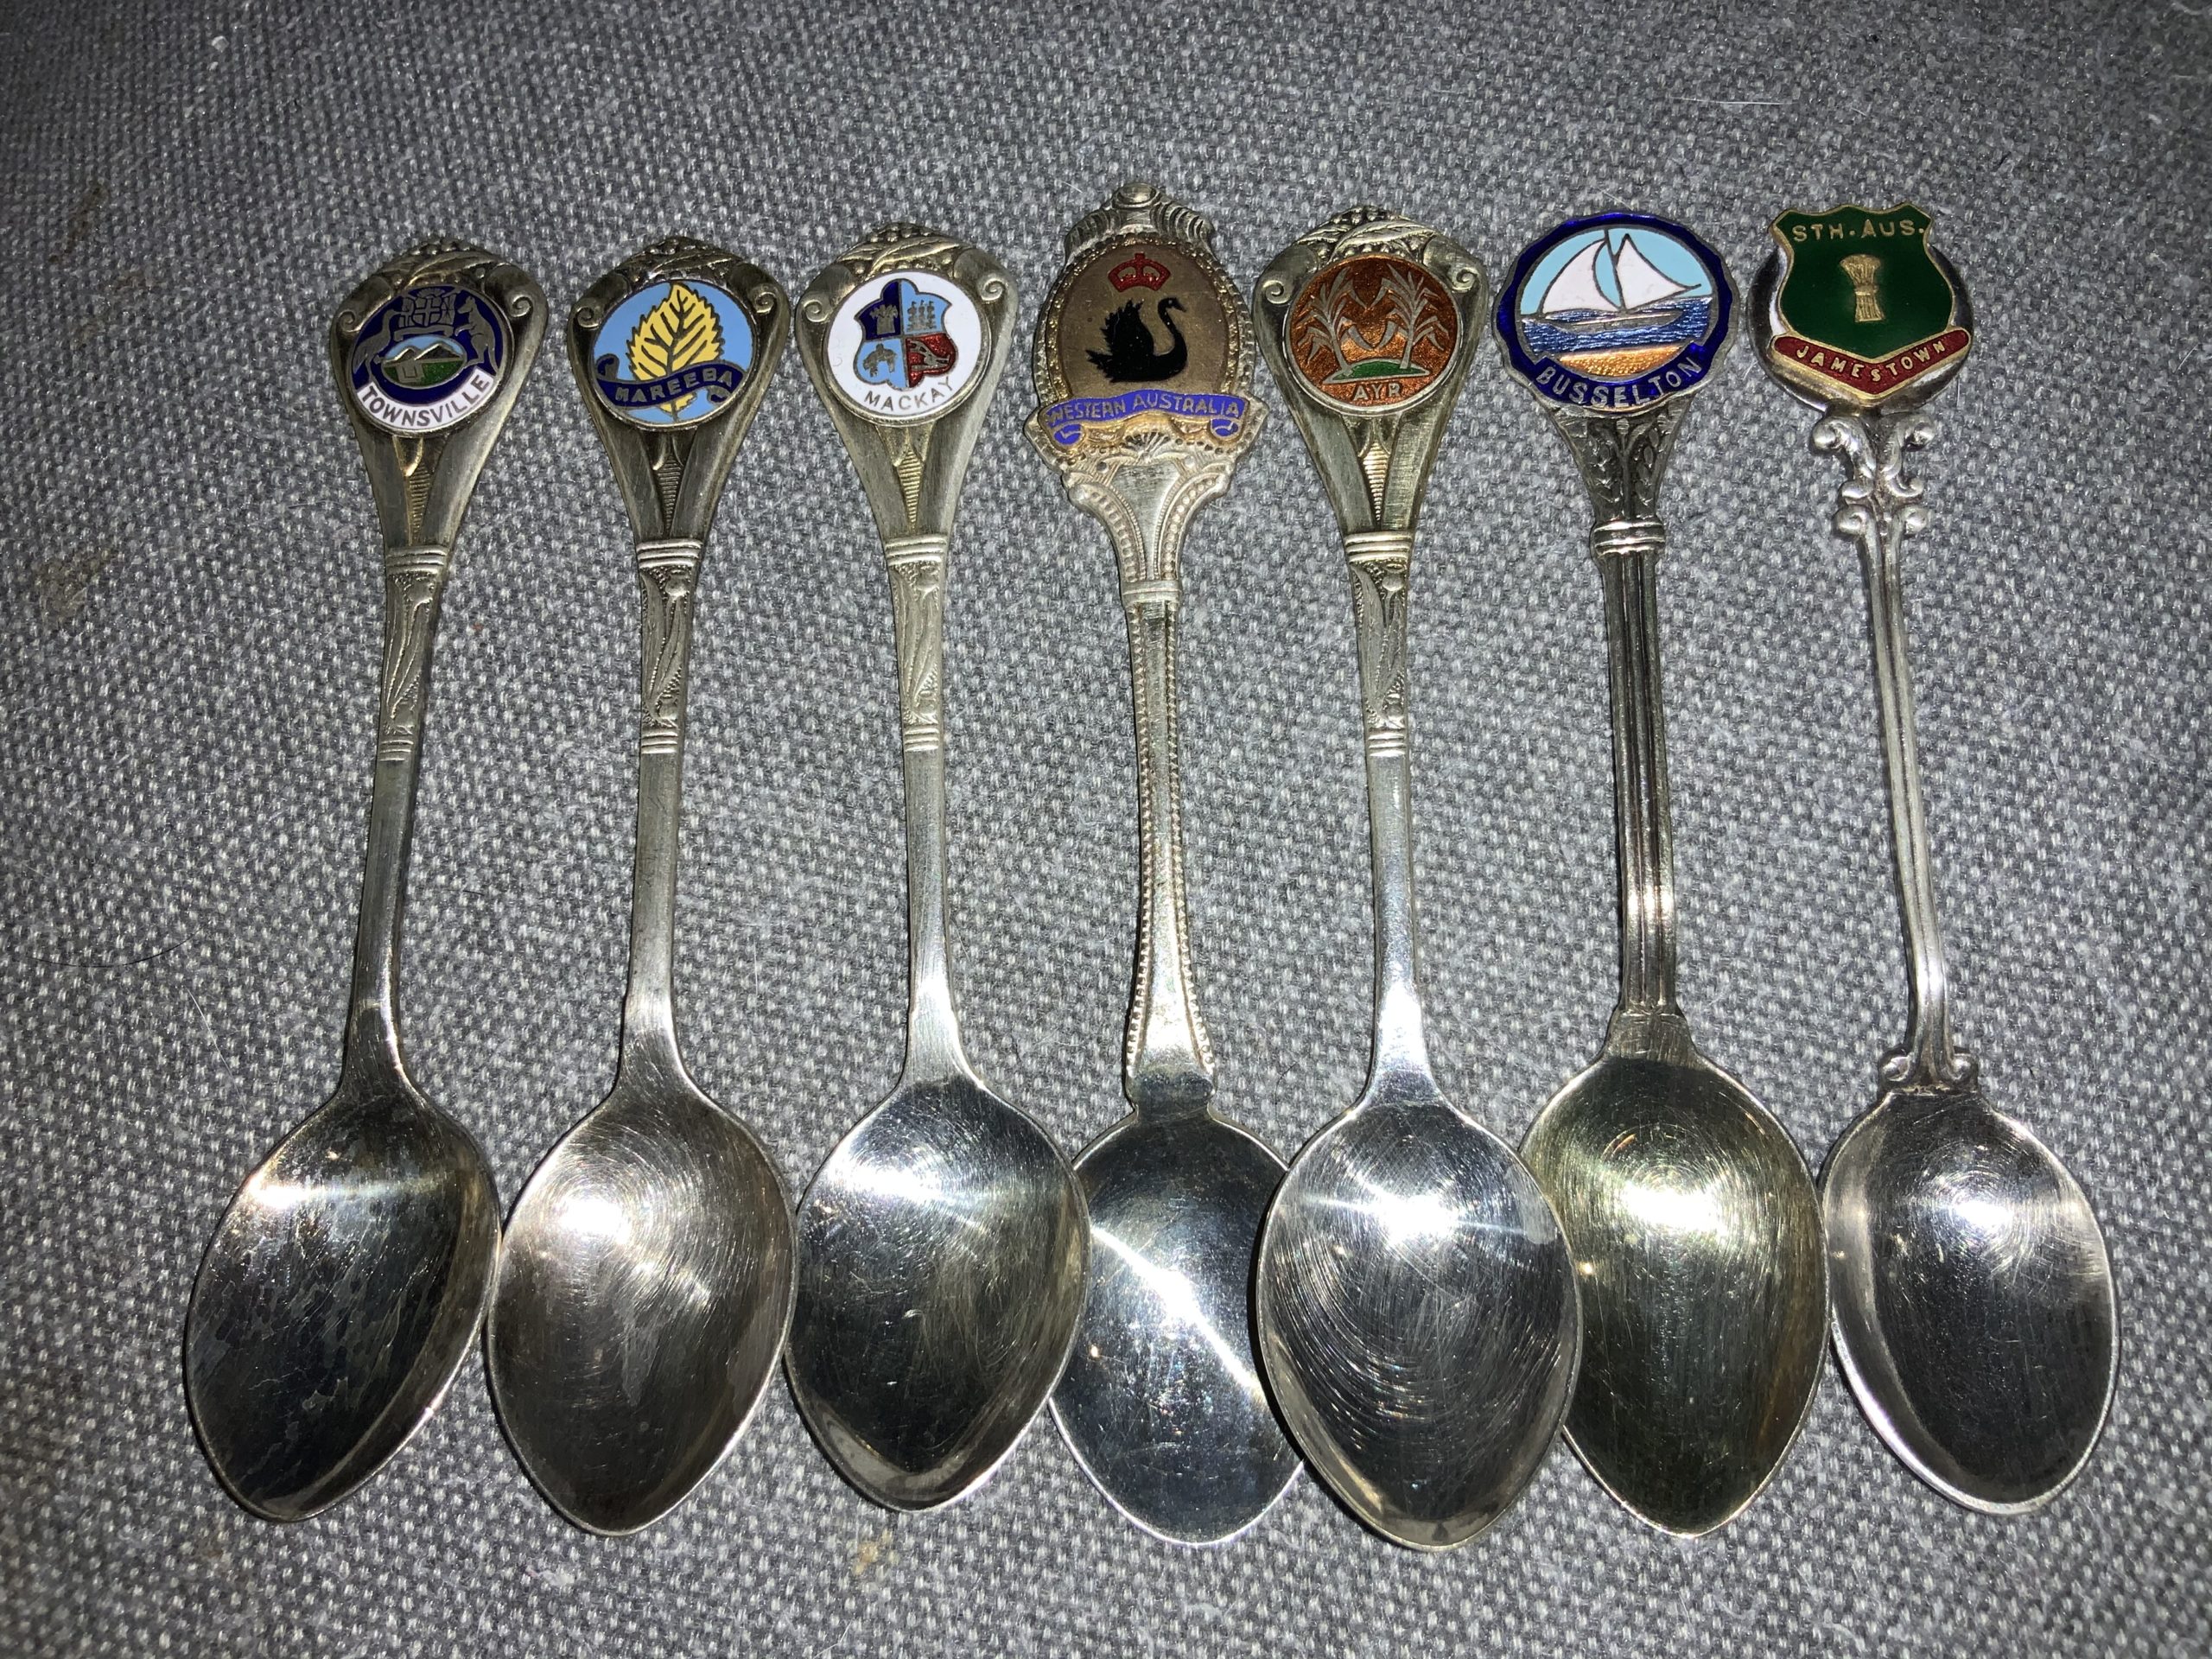 Antique spoons an Australian treat